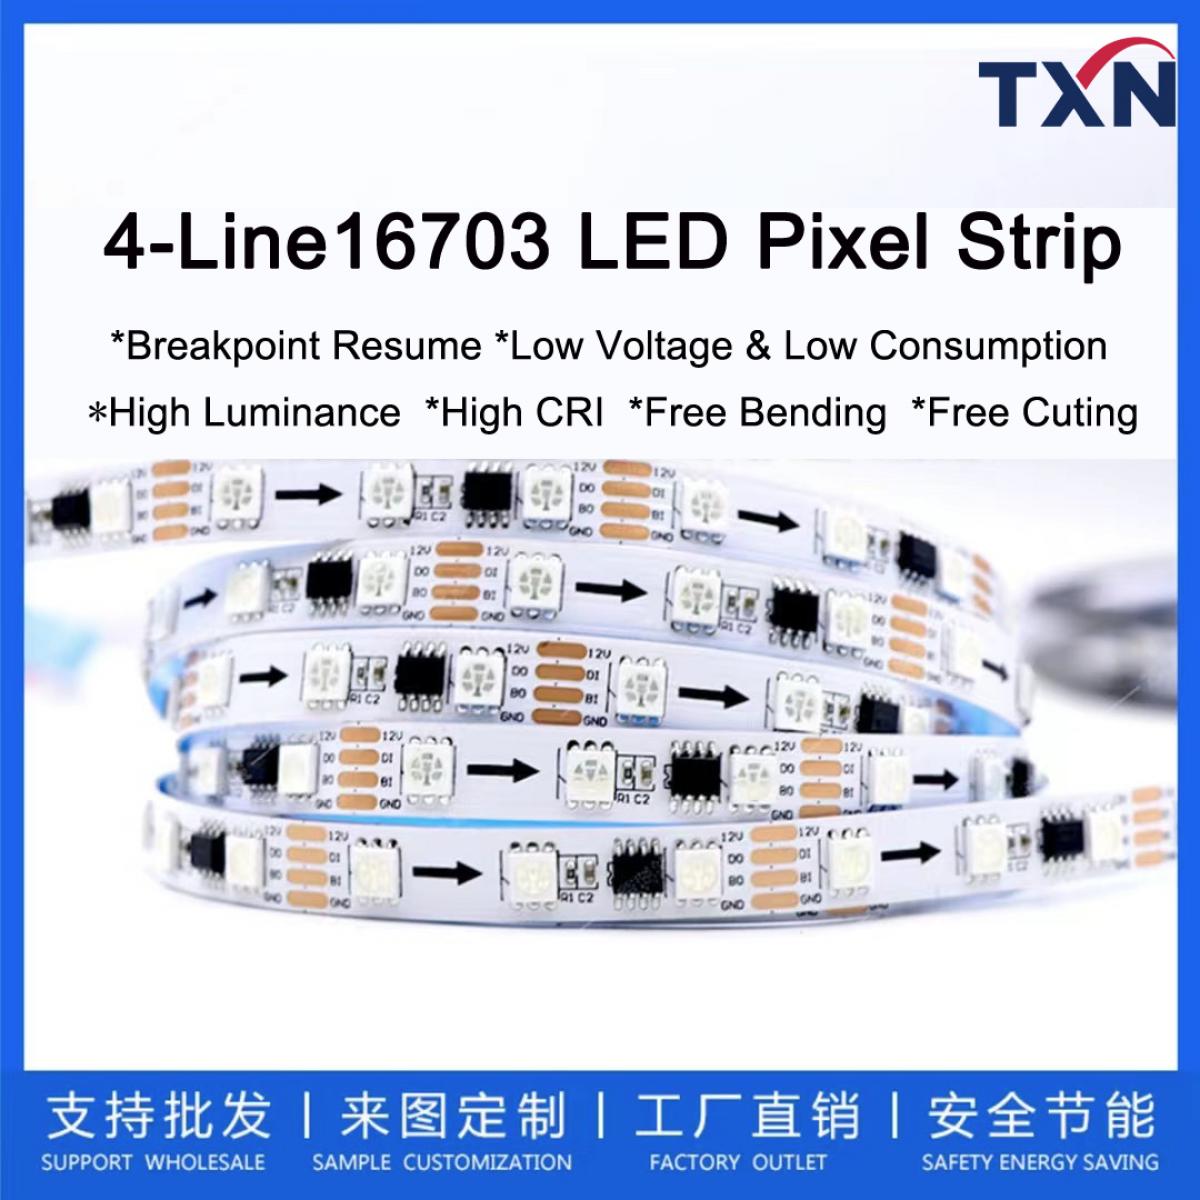 Hot-selling 16703 LED Pixel Strip